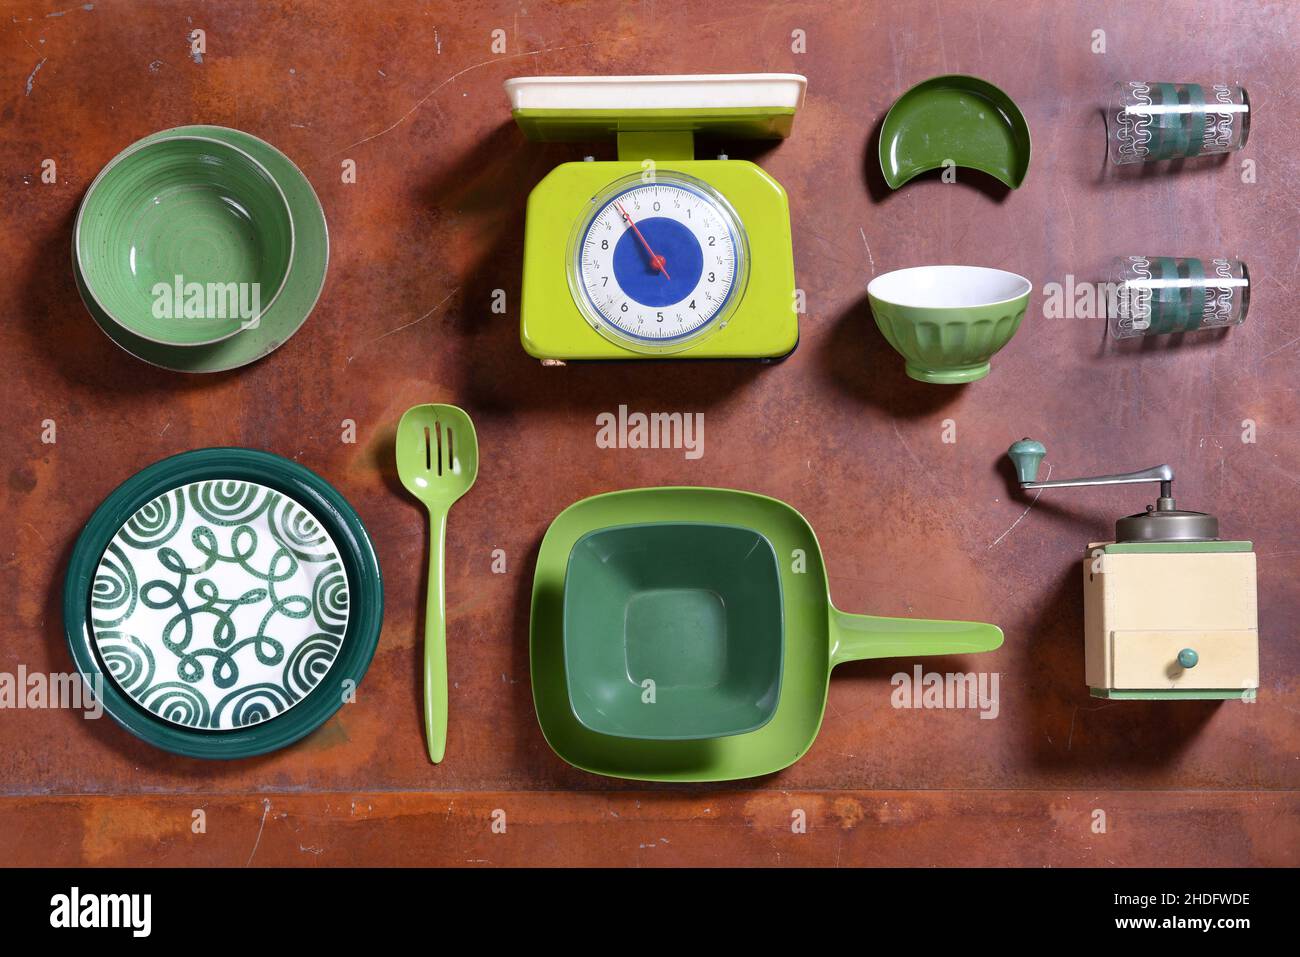 https://c8.alamy.com/comp/2HDFWDE/plastic-design-green-collection-kitchenware-vintage-plastics-synthetic-synthetic-material-designs-greens-collections-kitchenwares-vintage-2HDFWDE.jpg